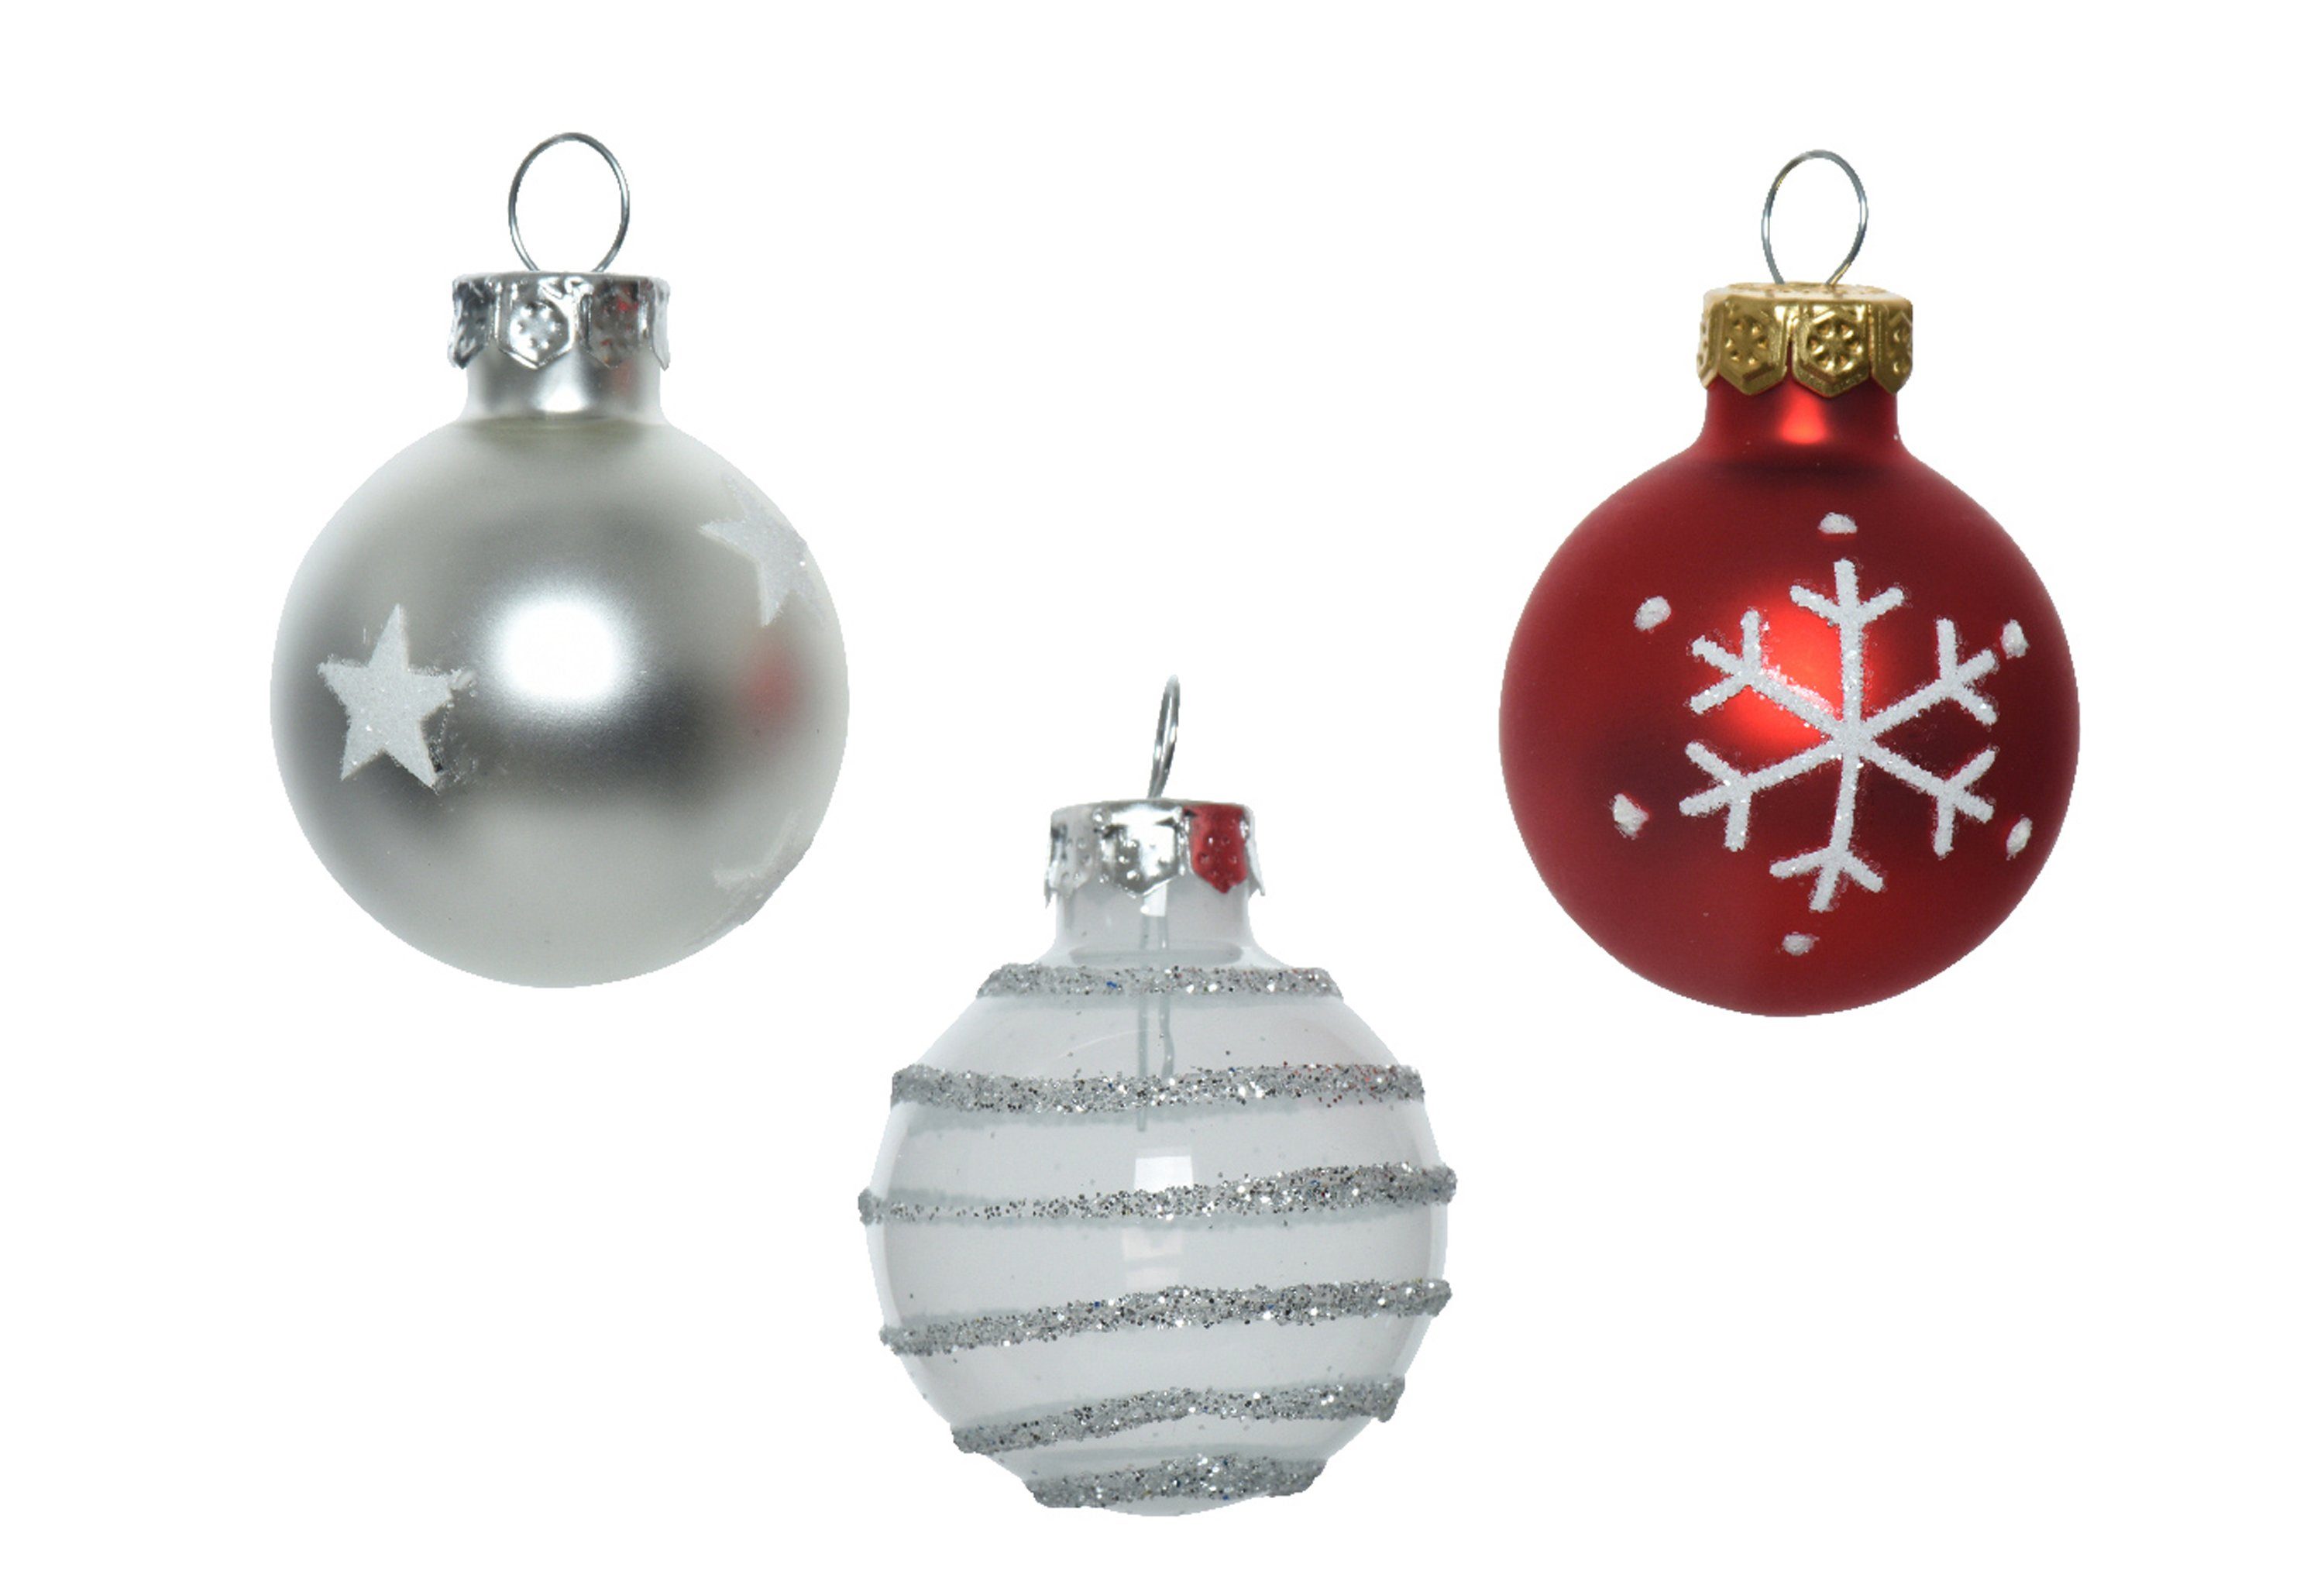 rot season / Mix, Motiven Weihnachtskugeln Decoris Christbaumschmuck, Glas 3cm decorations mit Set 9er silber